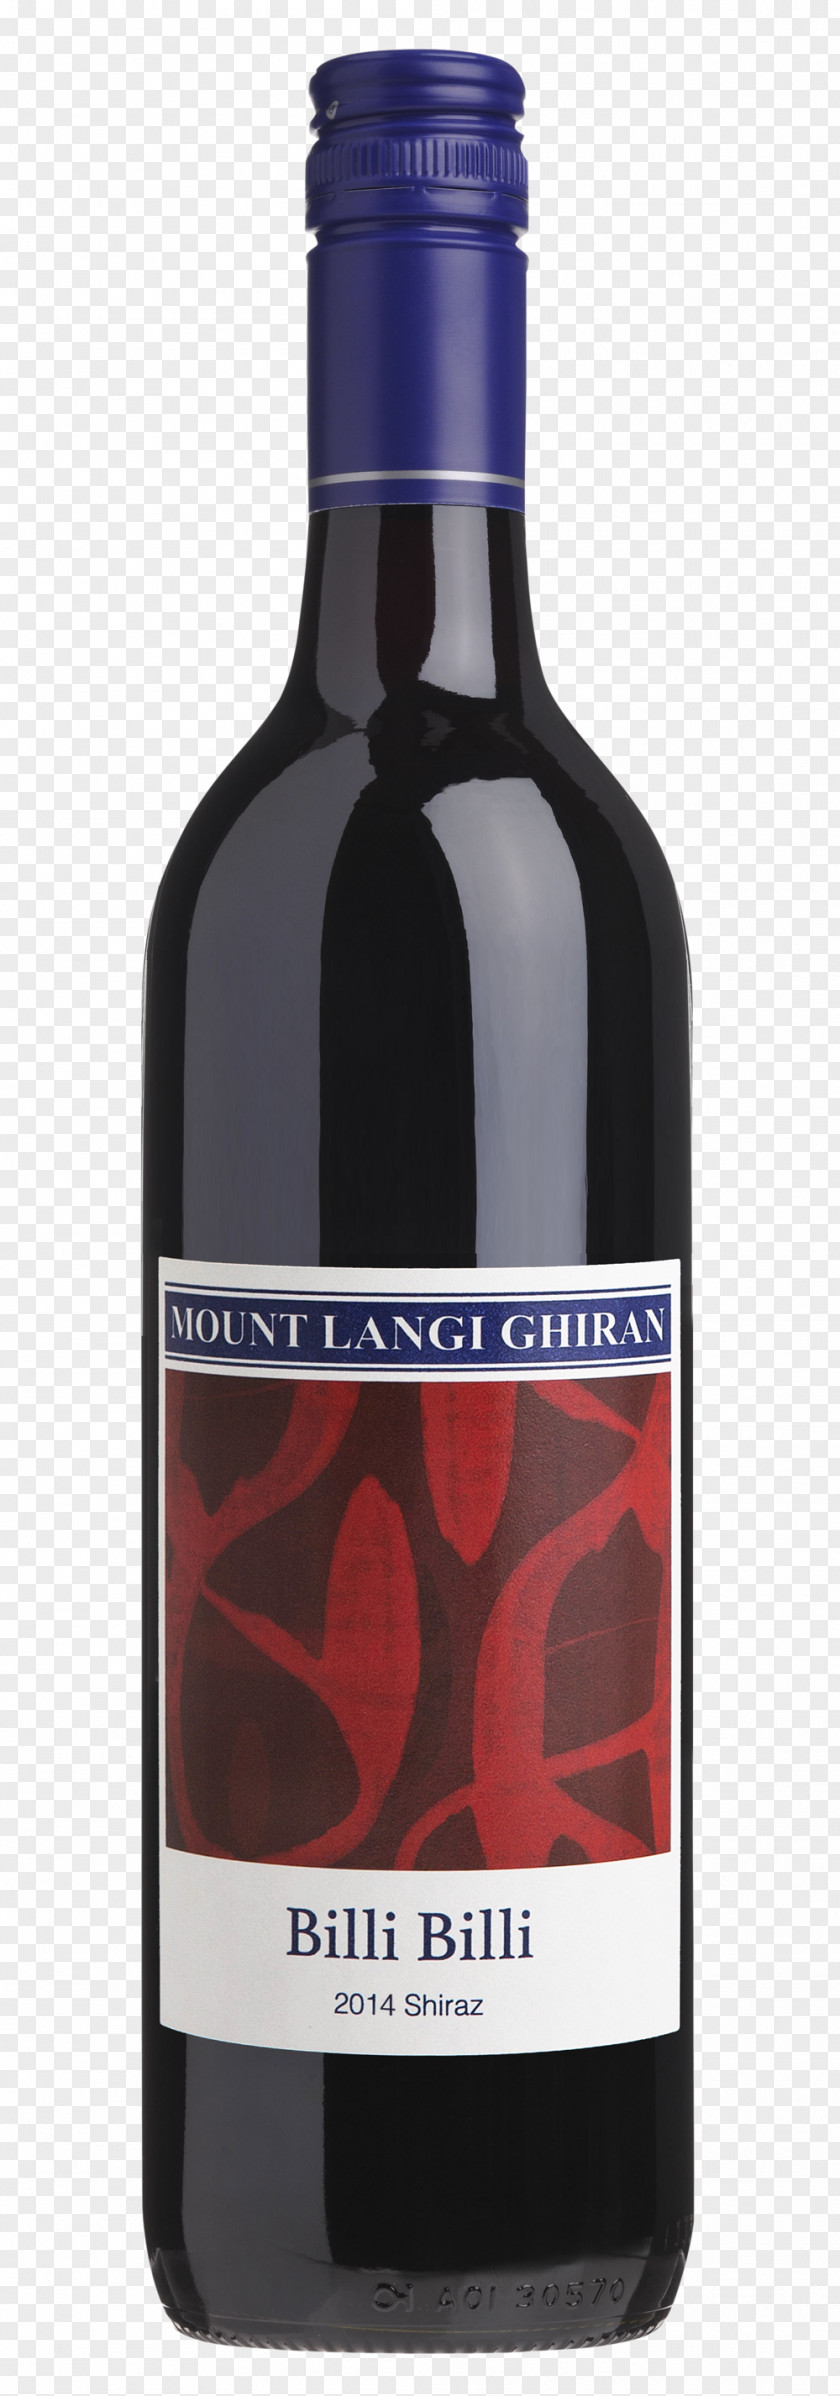 Cliffhanger Pinot Grigio Mount Langi Ghiran Billi Shiraz 2015 Liqueur Red Wine PNG